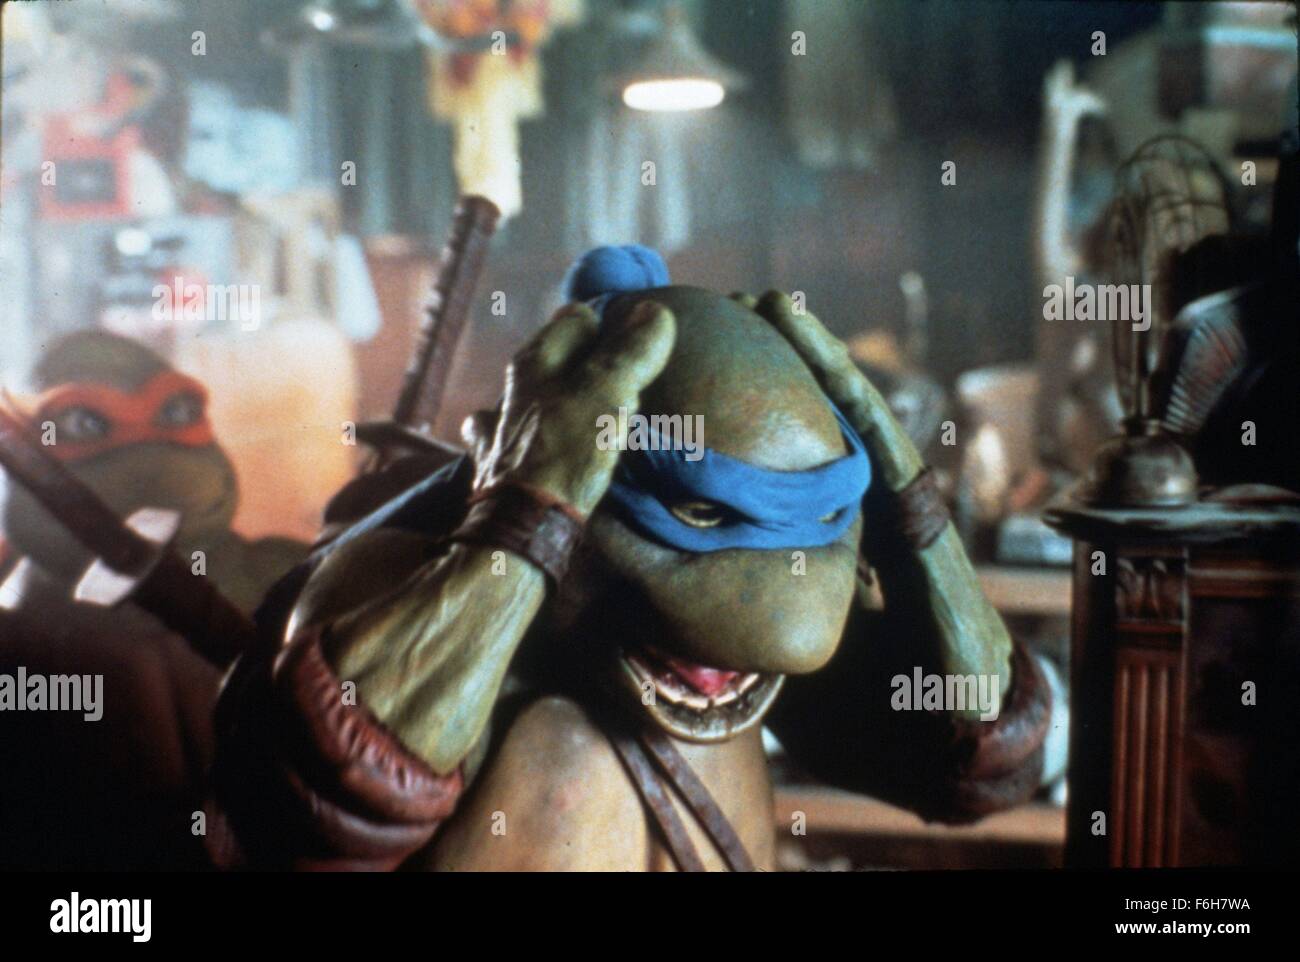 Leonardo als leonardo film titel teenage mutant ninja turtles -Fotos und  -Bildmaterial in hoher Auflösung – Alamy